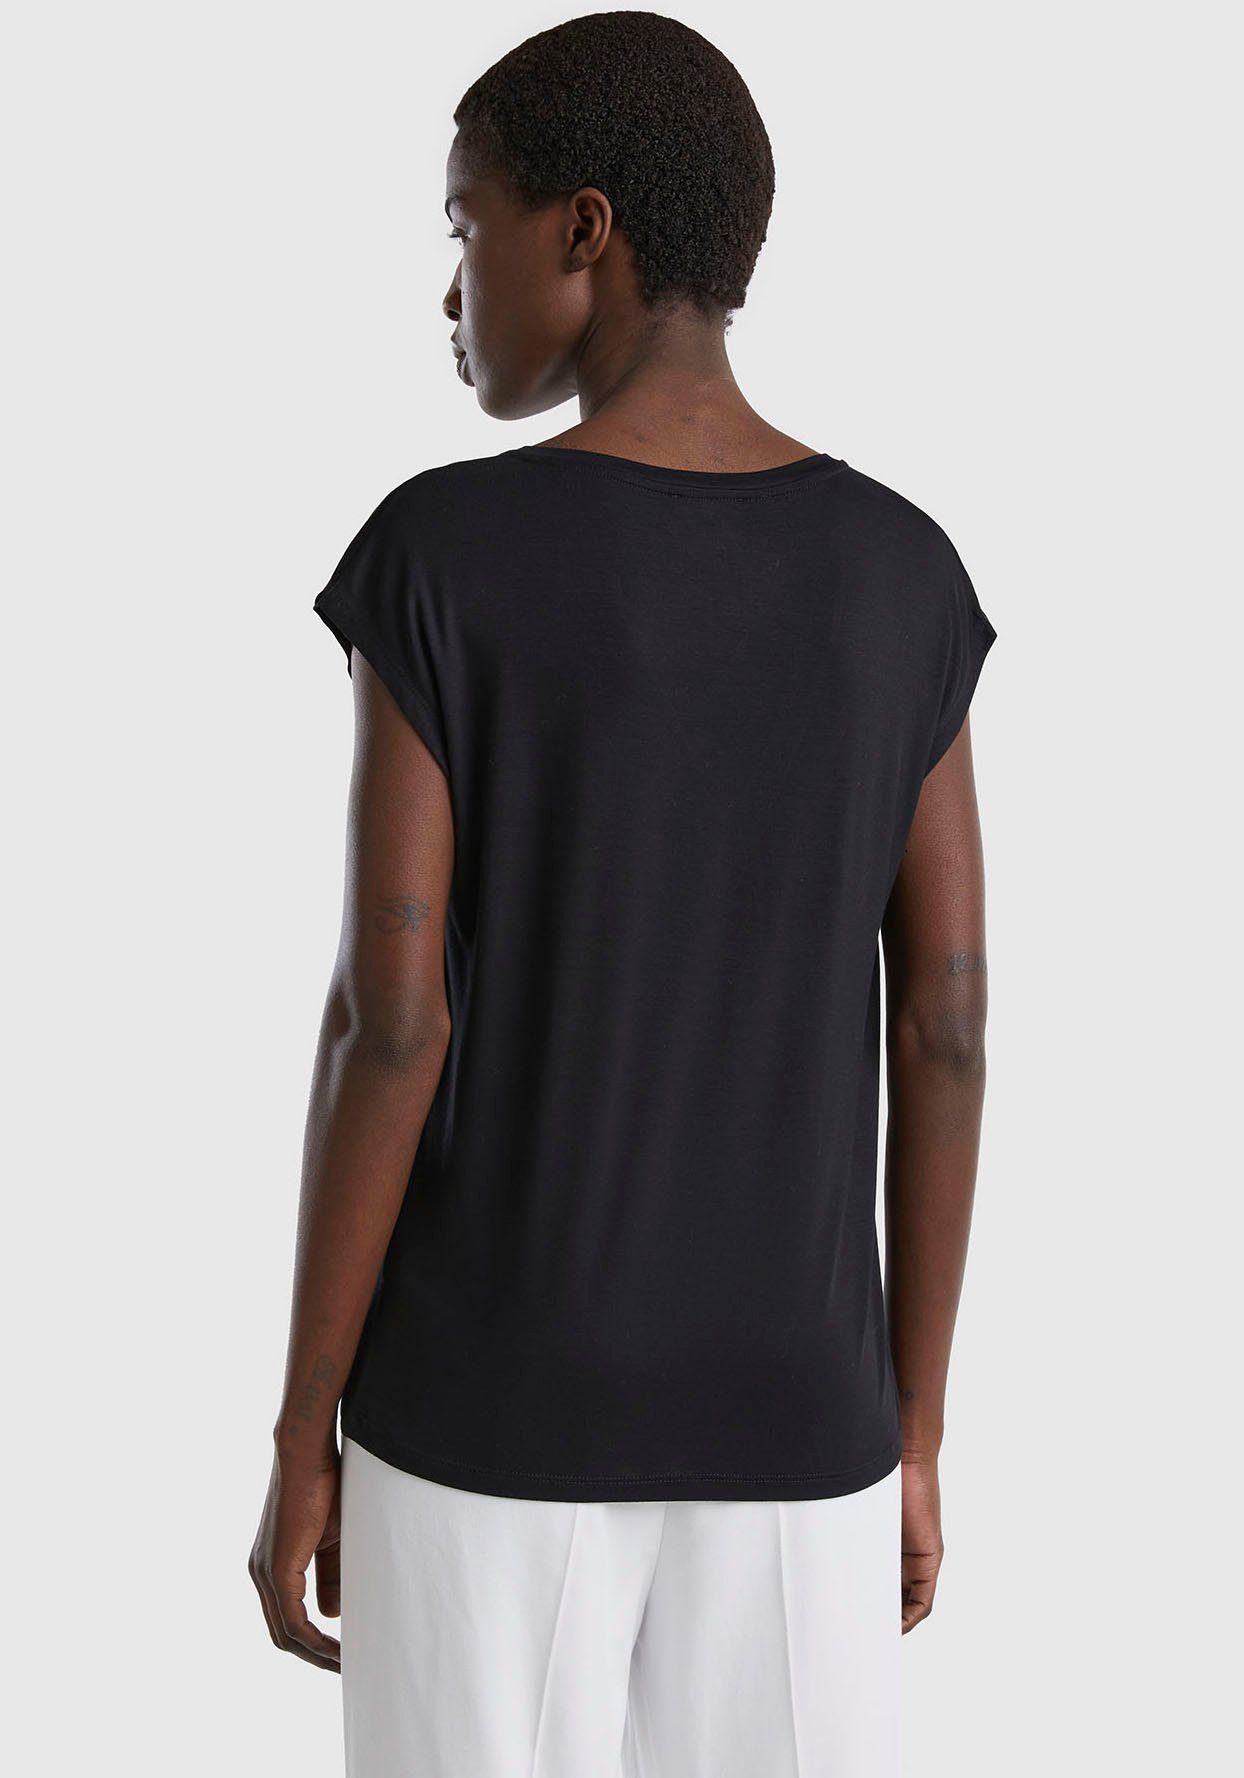 schwarz Colors of Benetton Passform United in lässiger V-Shirt T-SHIRT